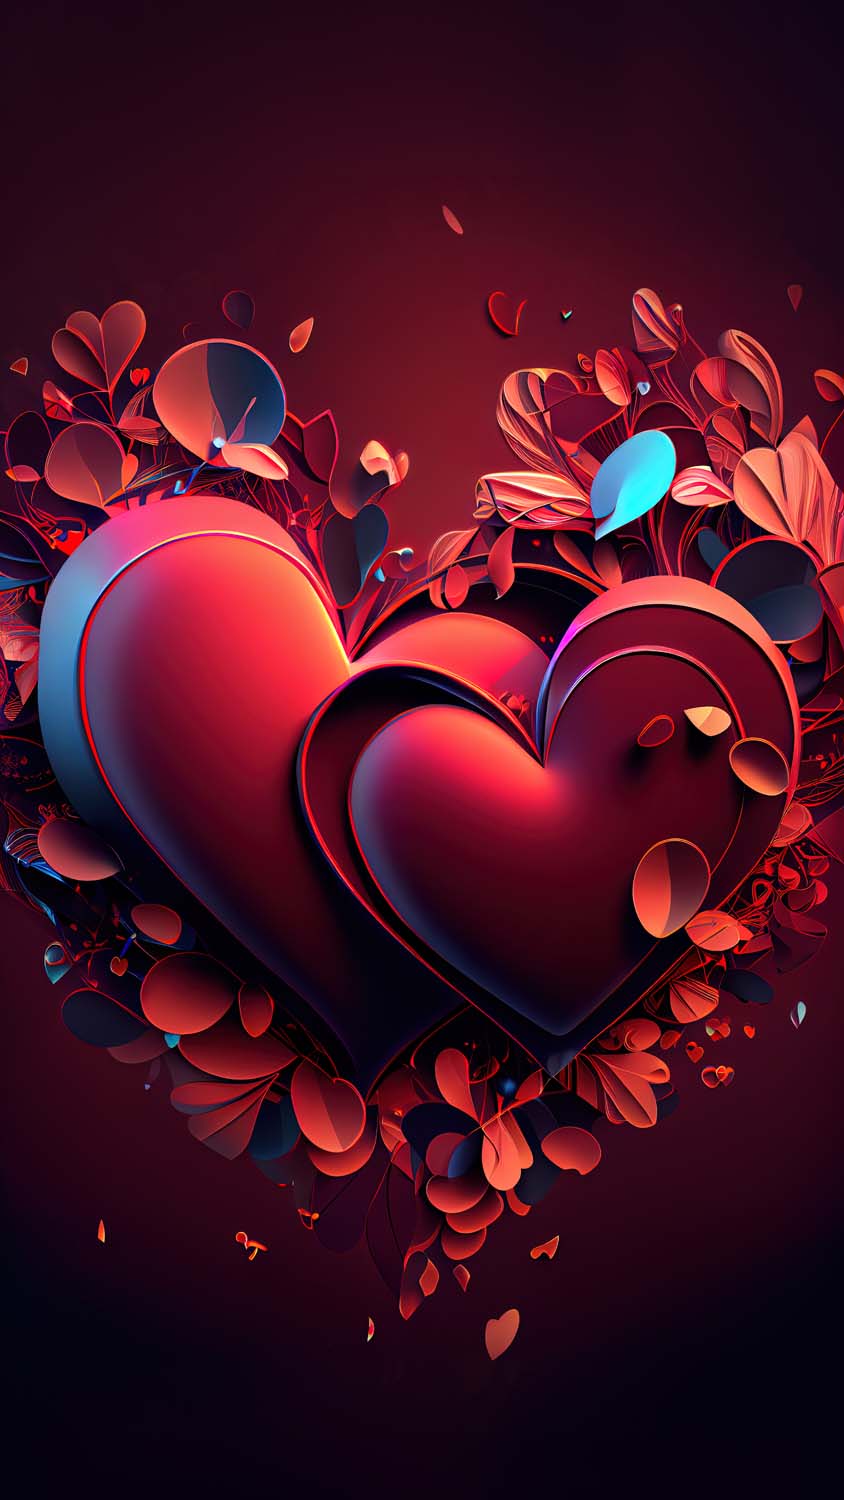 Hearts Love iPhone Wallpaper HD